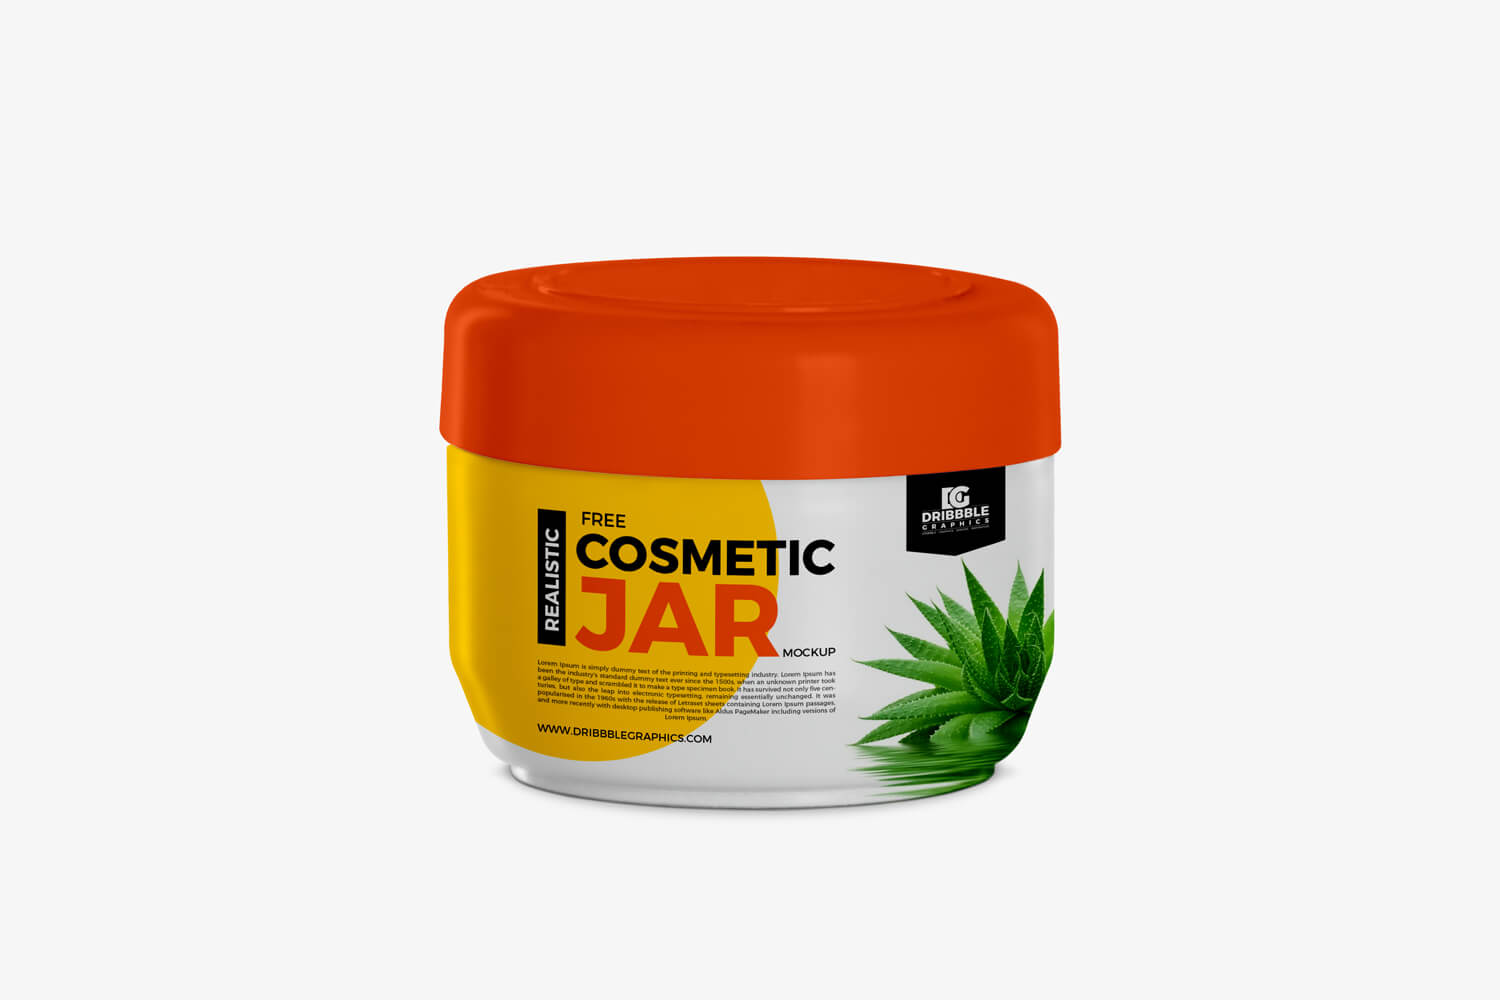 Free Cosmetic Jar Mockup PSD